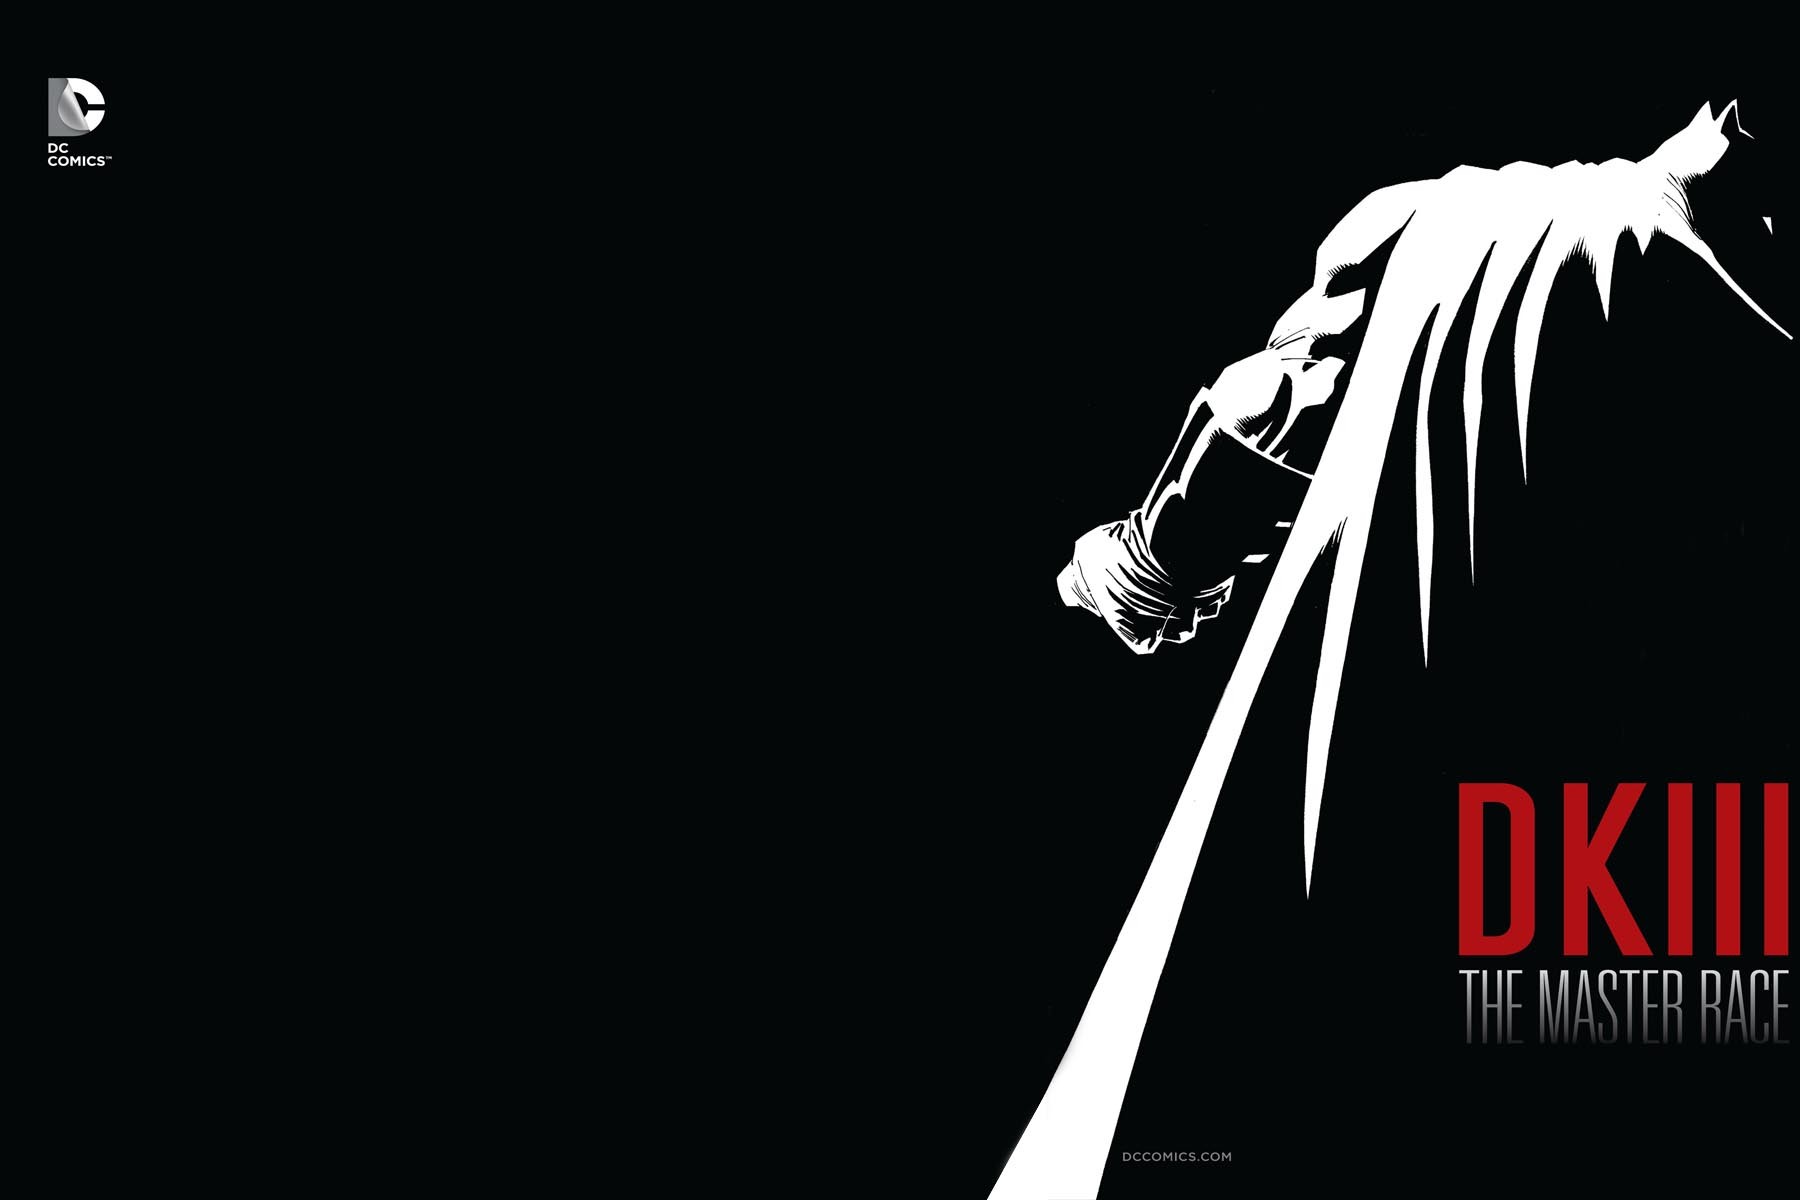 Batman, Frank Miller, DK III Wallpaper